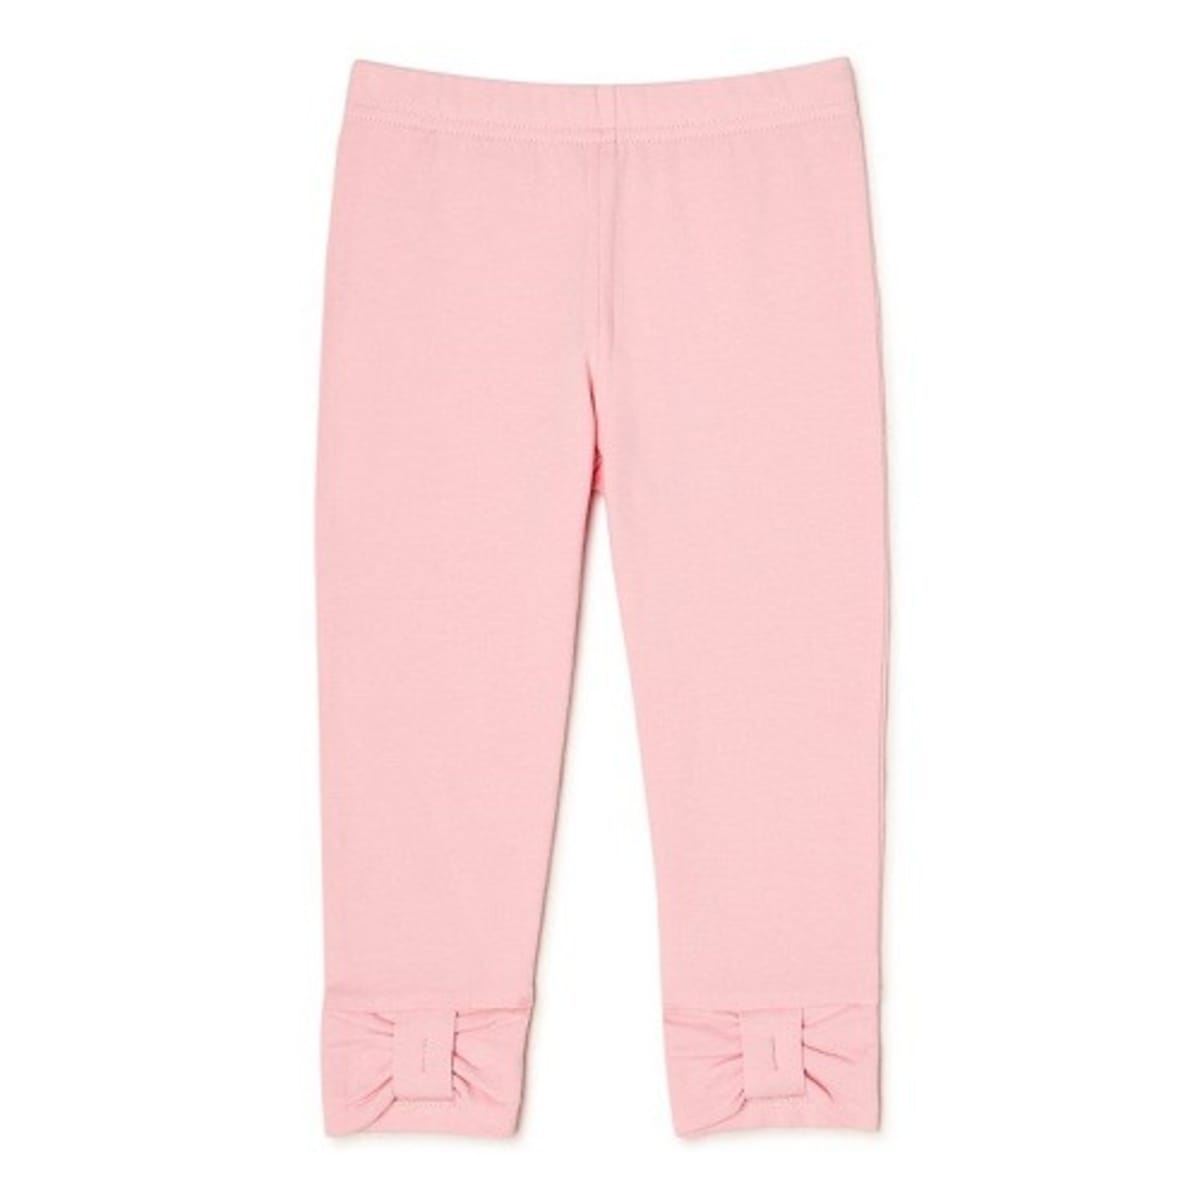 Garanimals 365 Kids Girls Bow Plain Leggings - Light Pink